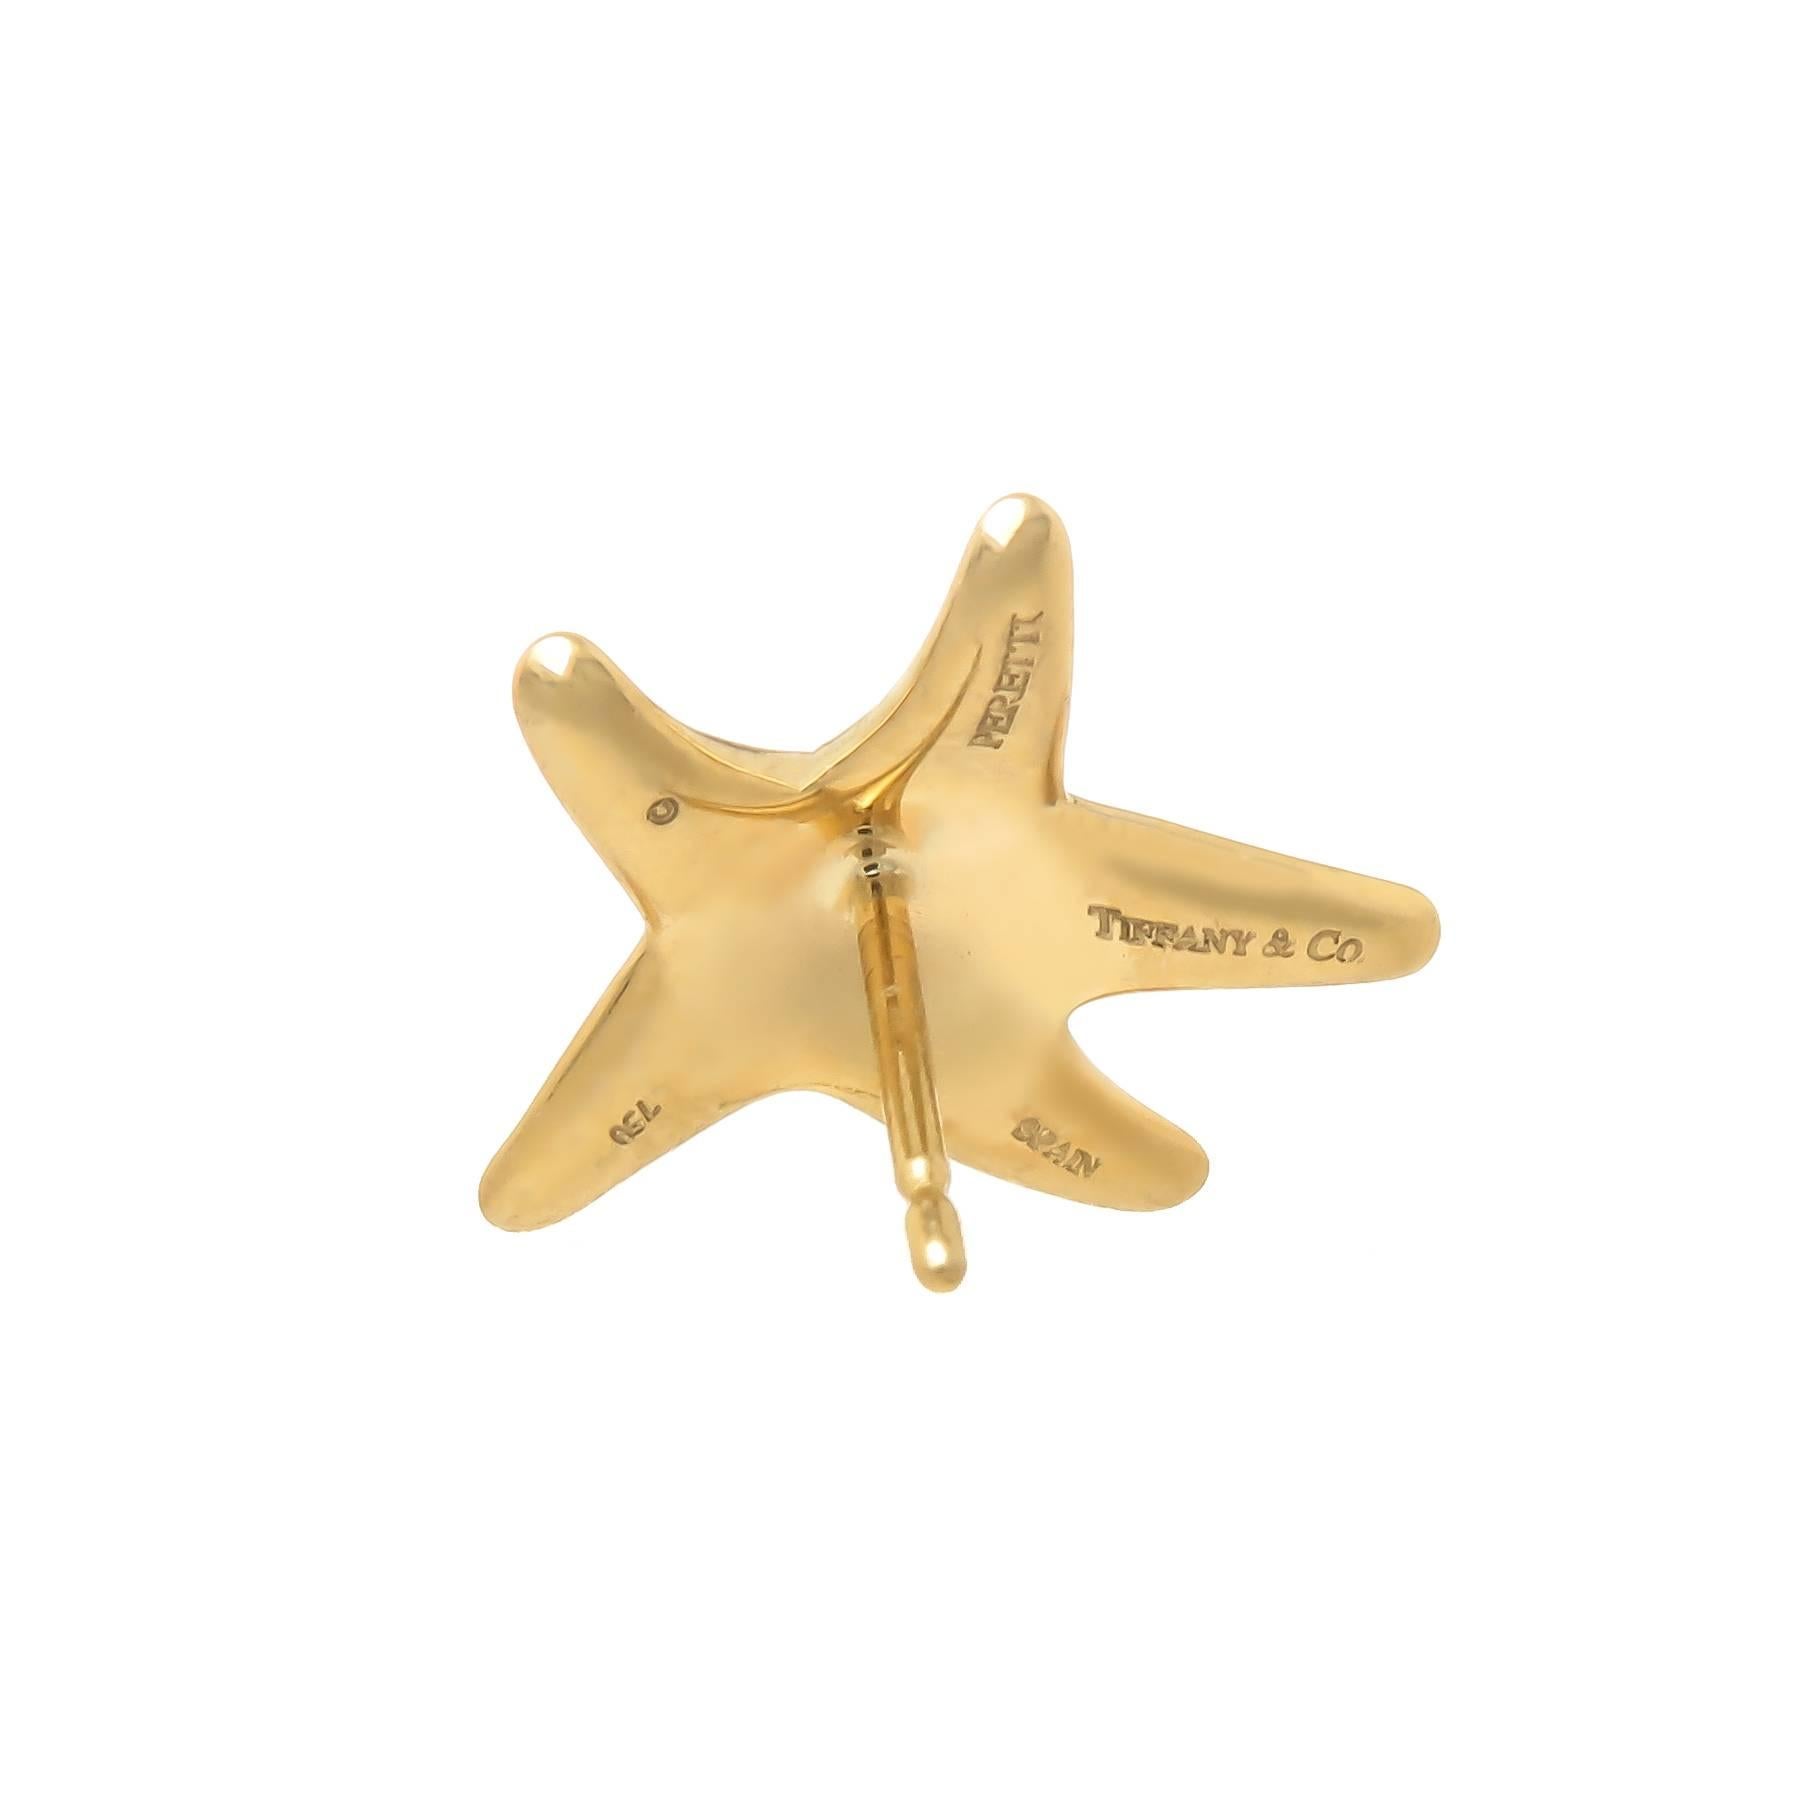 Circa 2010 Elsa Peretti for Tiffany & Company, 18k Yellow Gold StarFish earrings, measuring 5/8 X 1/2 inch.  Post backs.